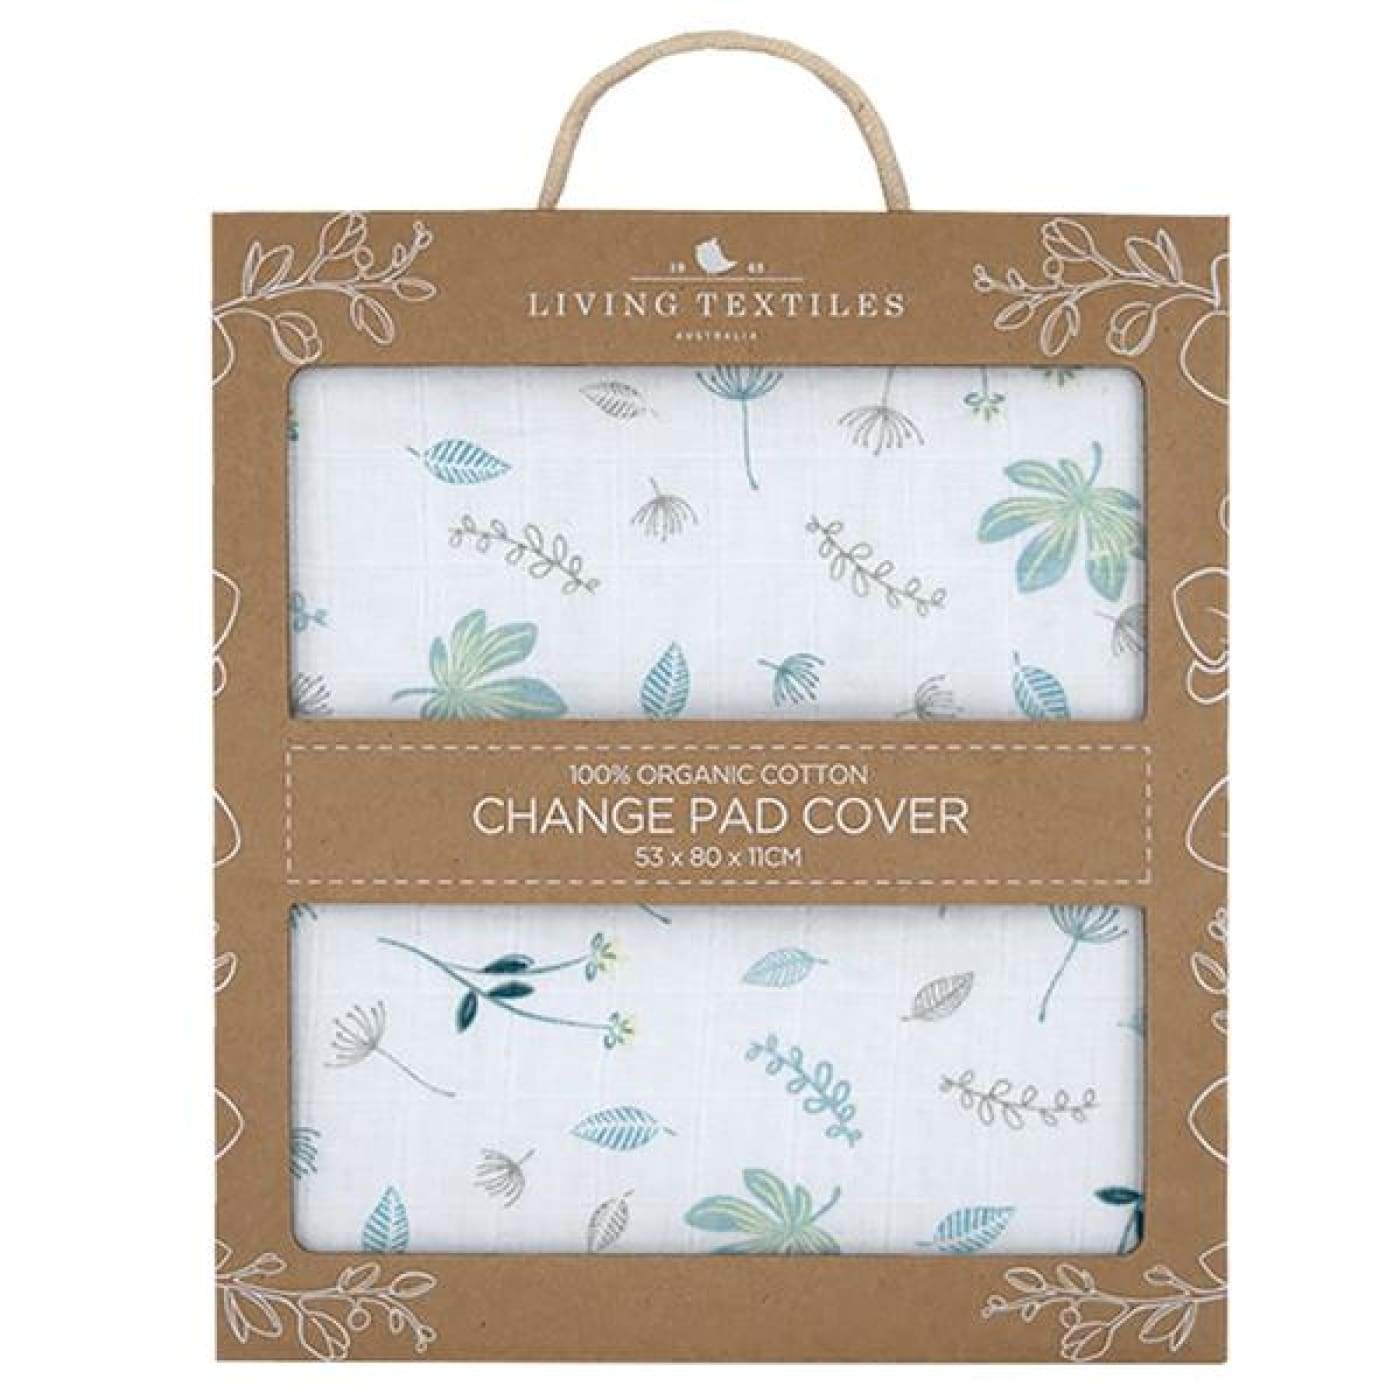 Living Textiles Muslin Change Pad Cover - Banana Leaf/Teal - Banana Leaf - BATHTIME & CHANGING - CHANGE MATS/COVERS